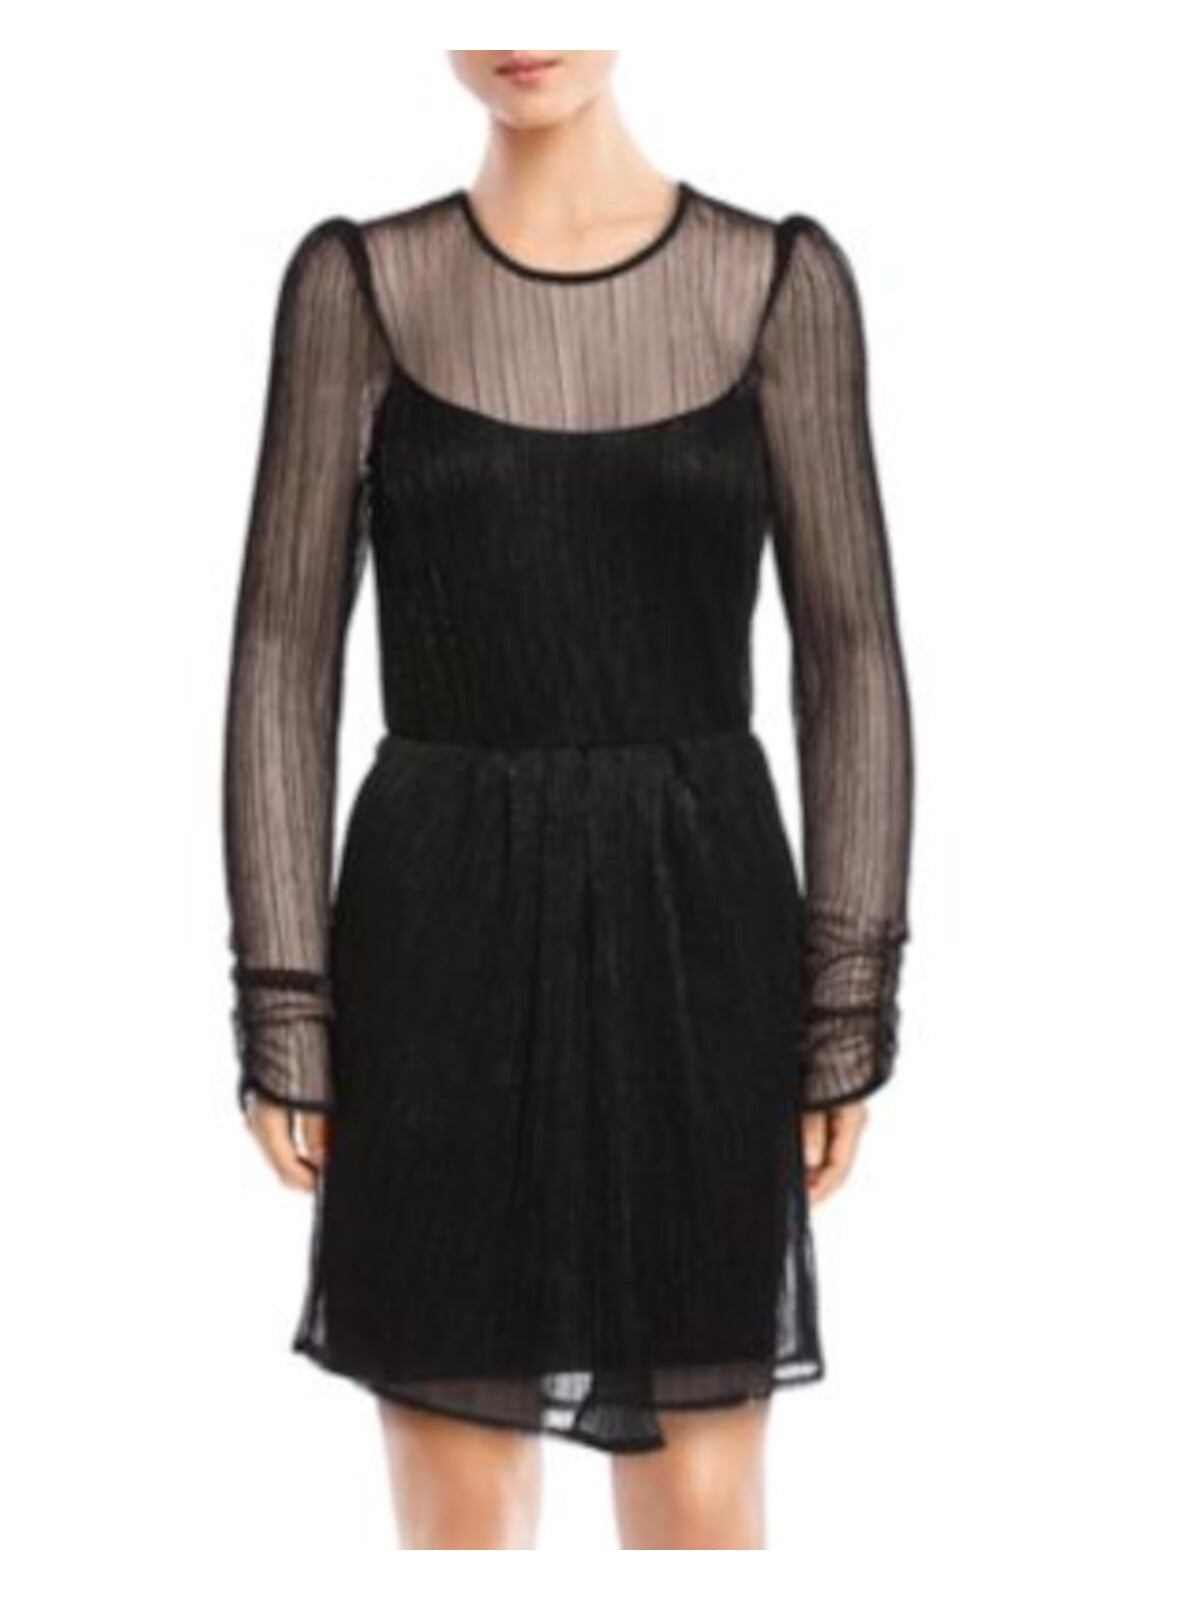 BAILEY44 Womens Black Stretch Sheer Metallic Long Sleeve Illusion Neckline Short Cocktail Sheath Dress S